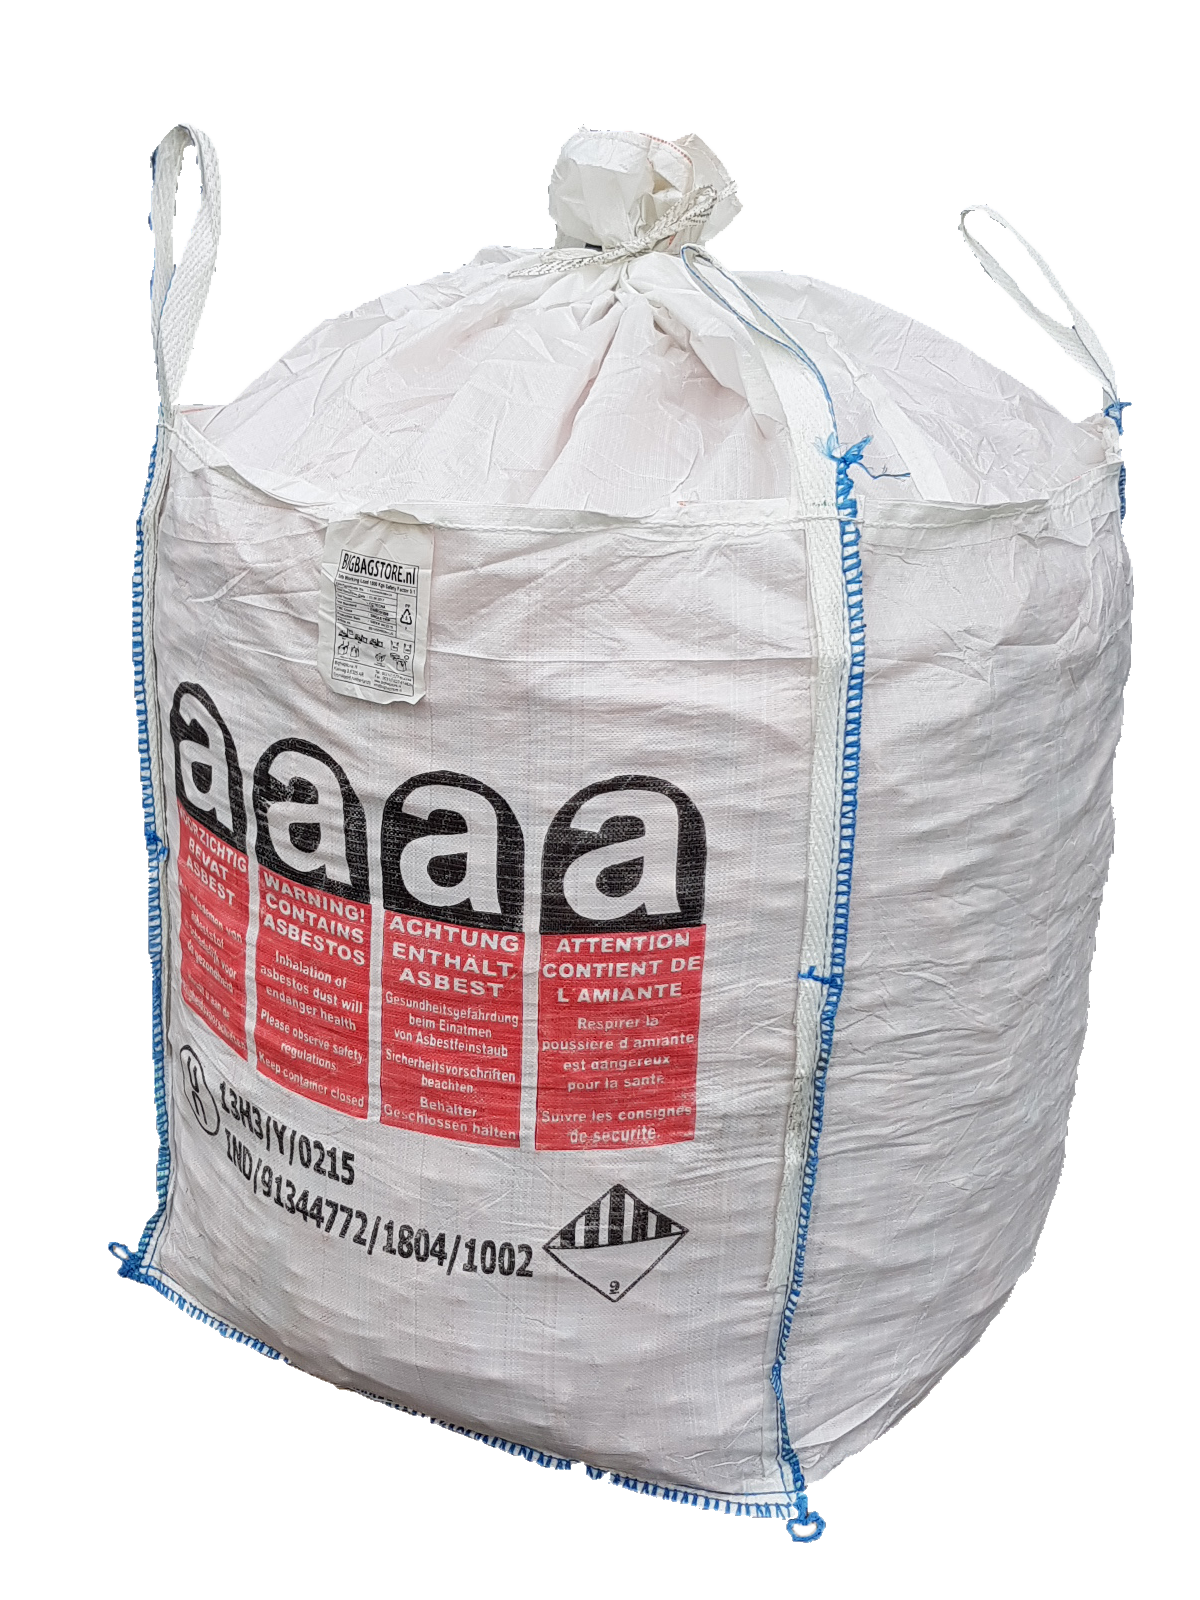 Asbestos cubic bags